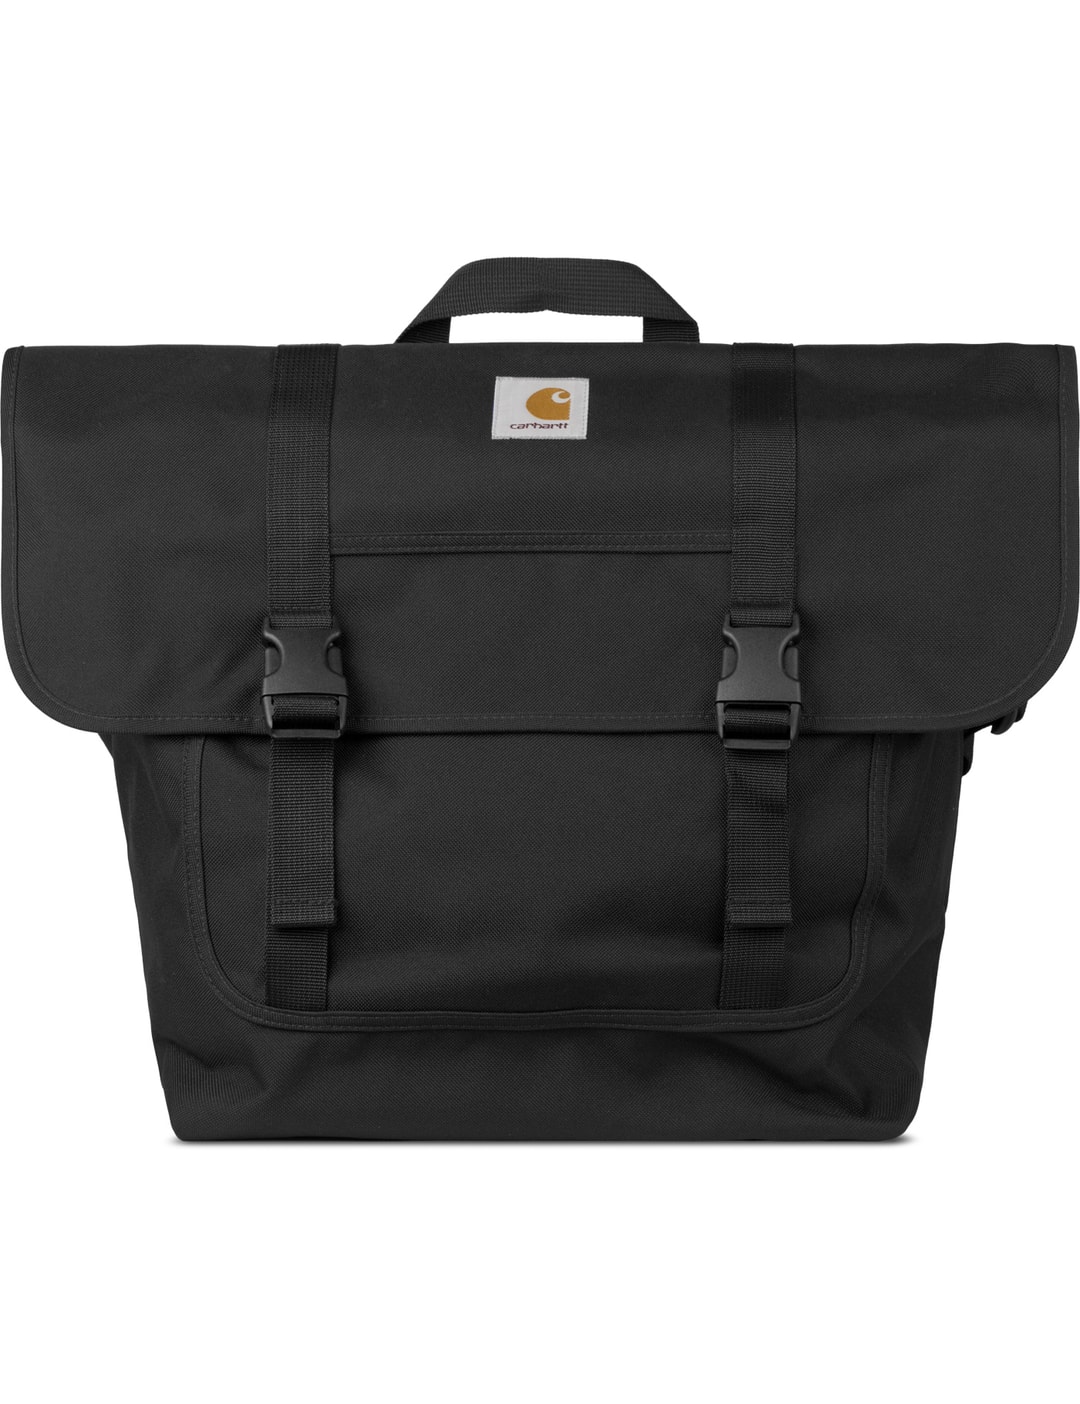 Carhartt Parcel Messenger Bag in Black for Men